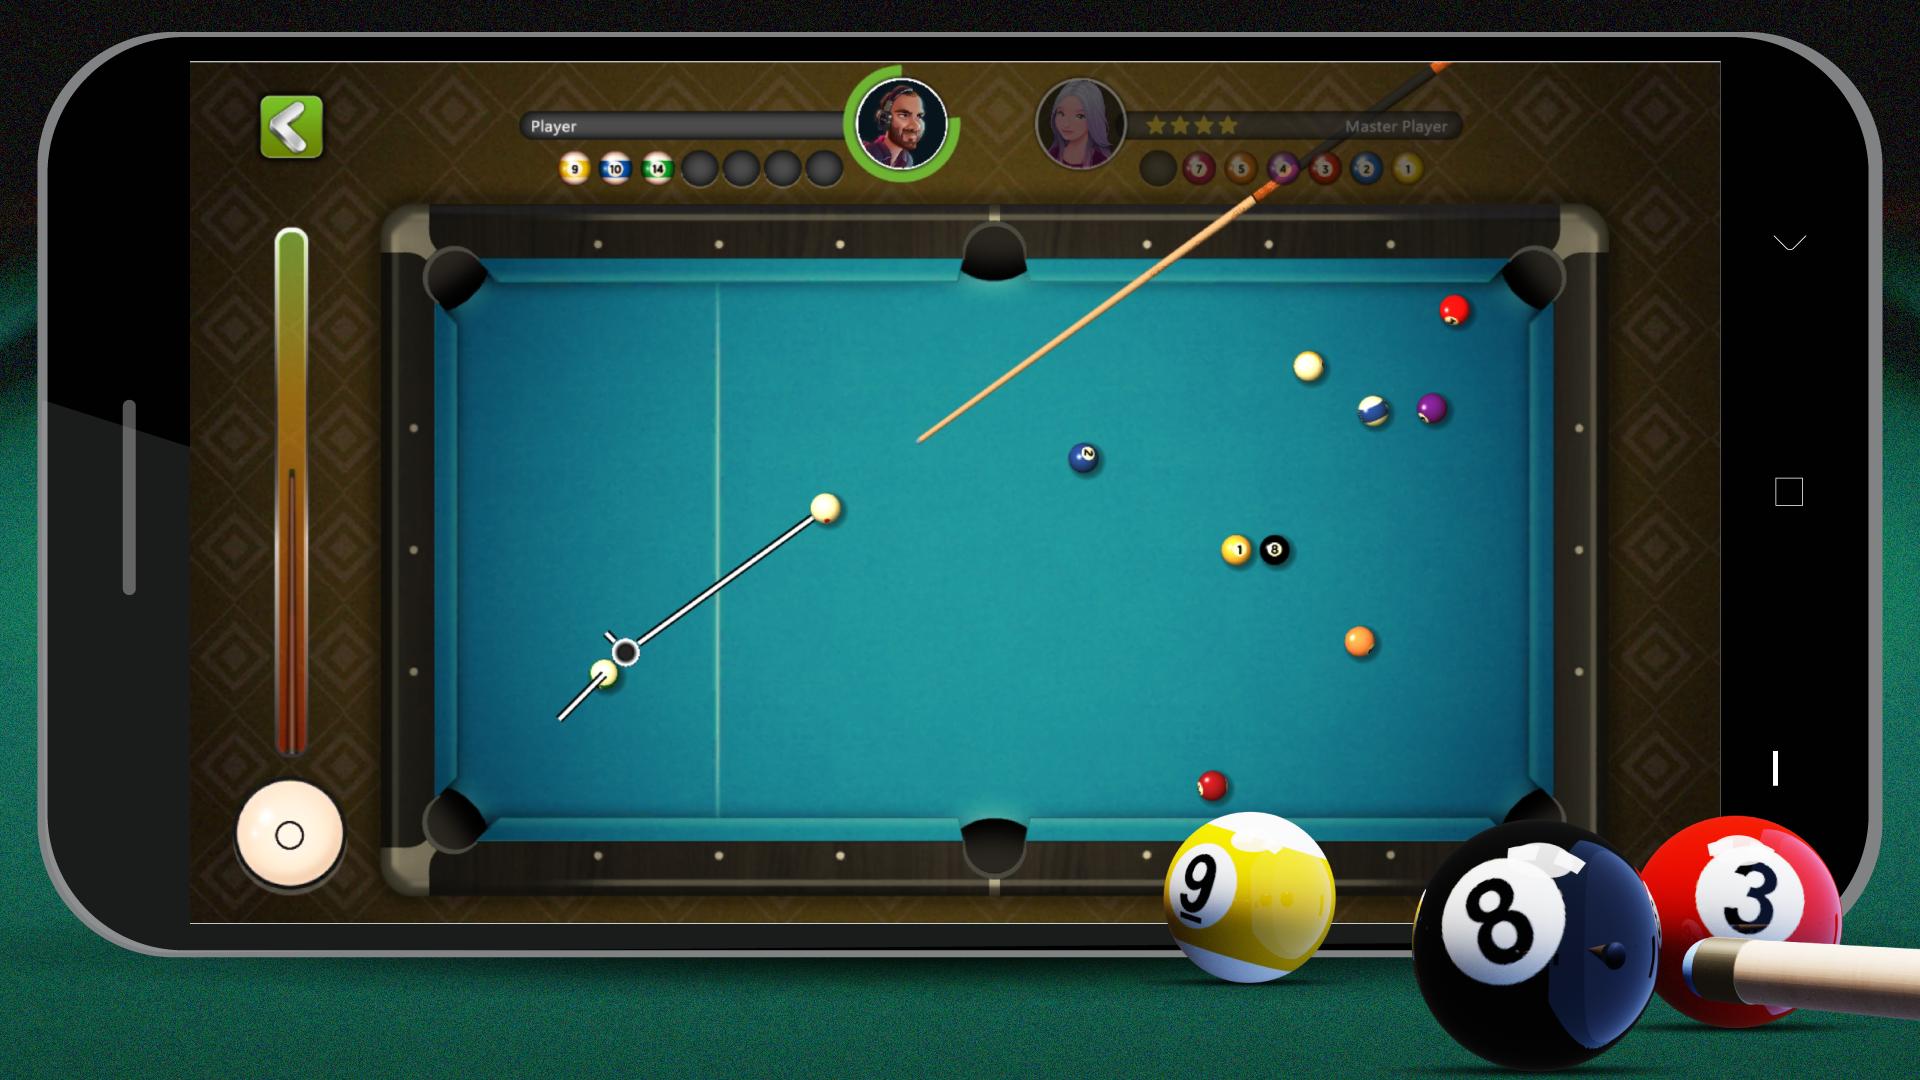 8 Ball Billiards- Offline Free Pool Game 1.51 Screenshot 22